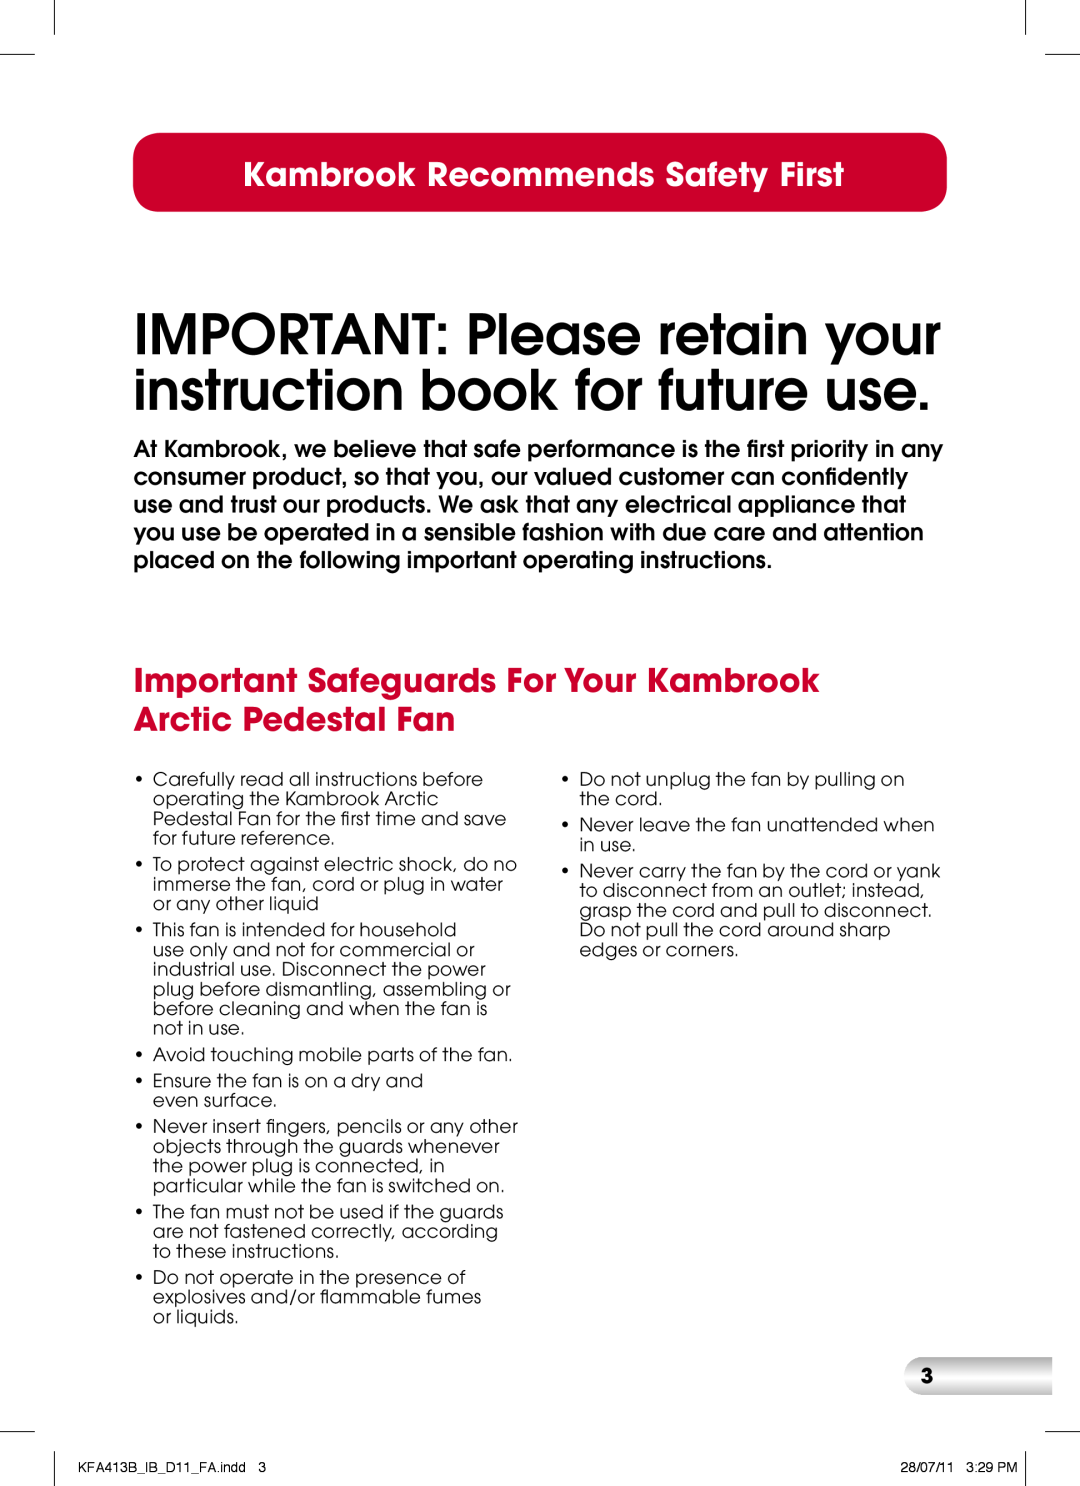 Kambrook KFA413B manual Kambrook Recommends Safety First 